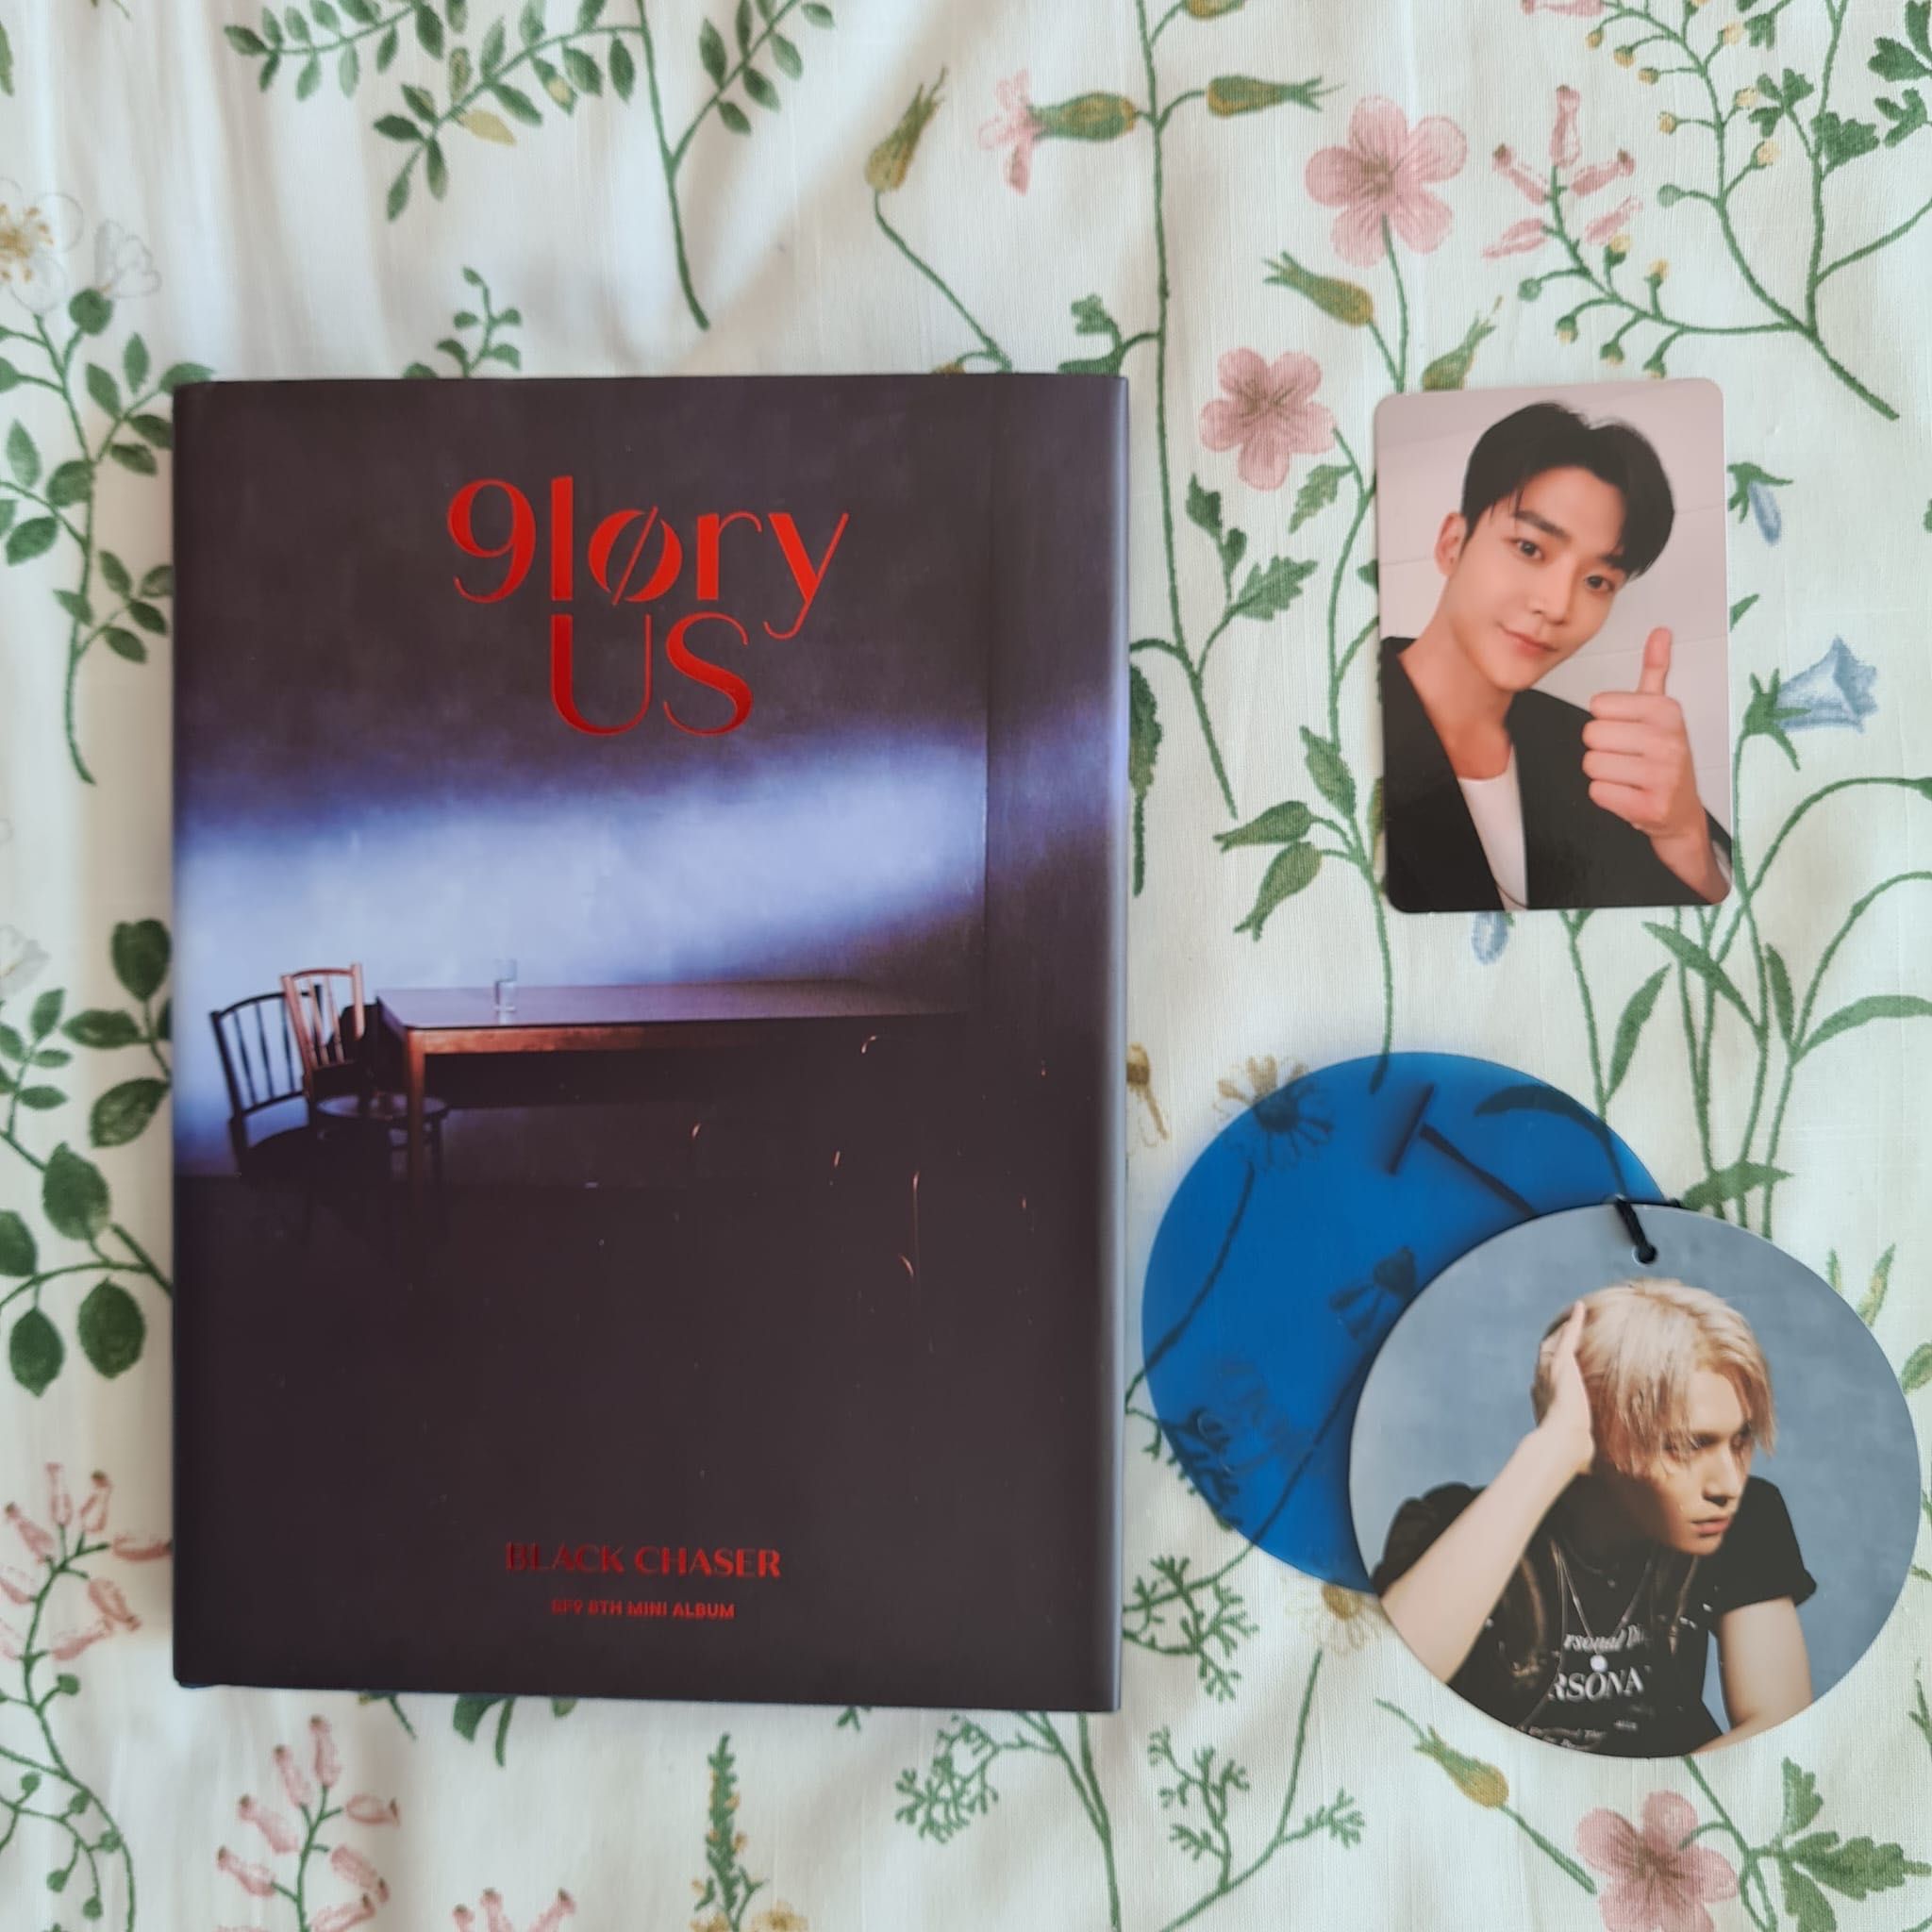 SF9 -9loryUS (8th mini album)